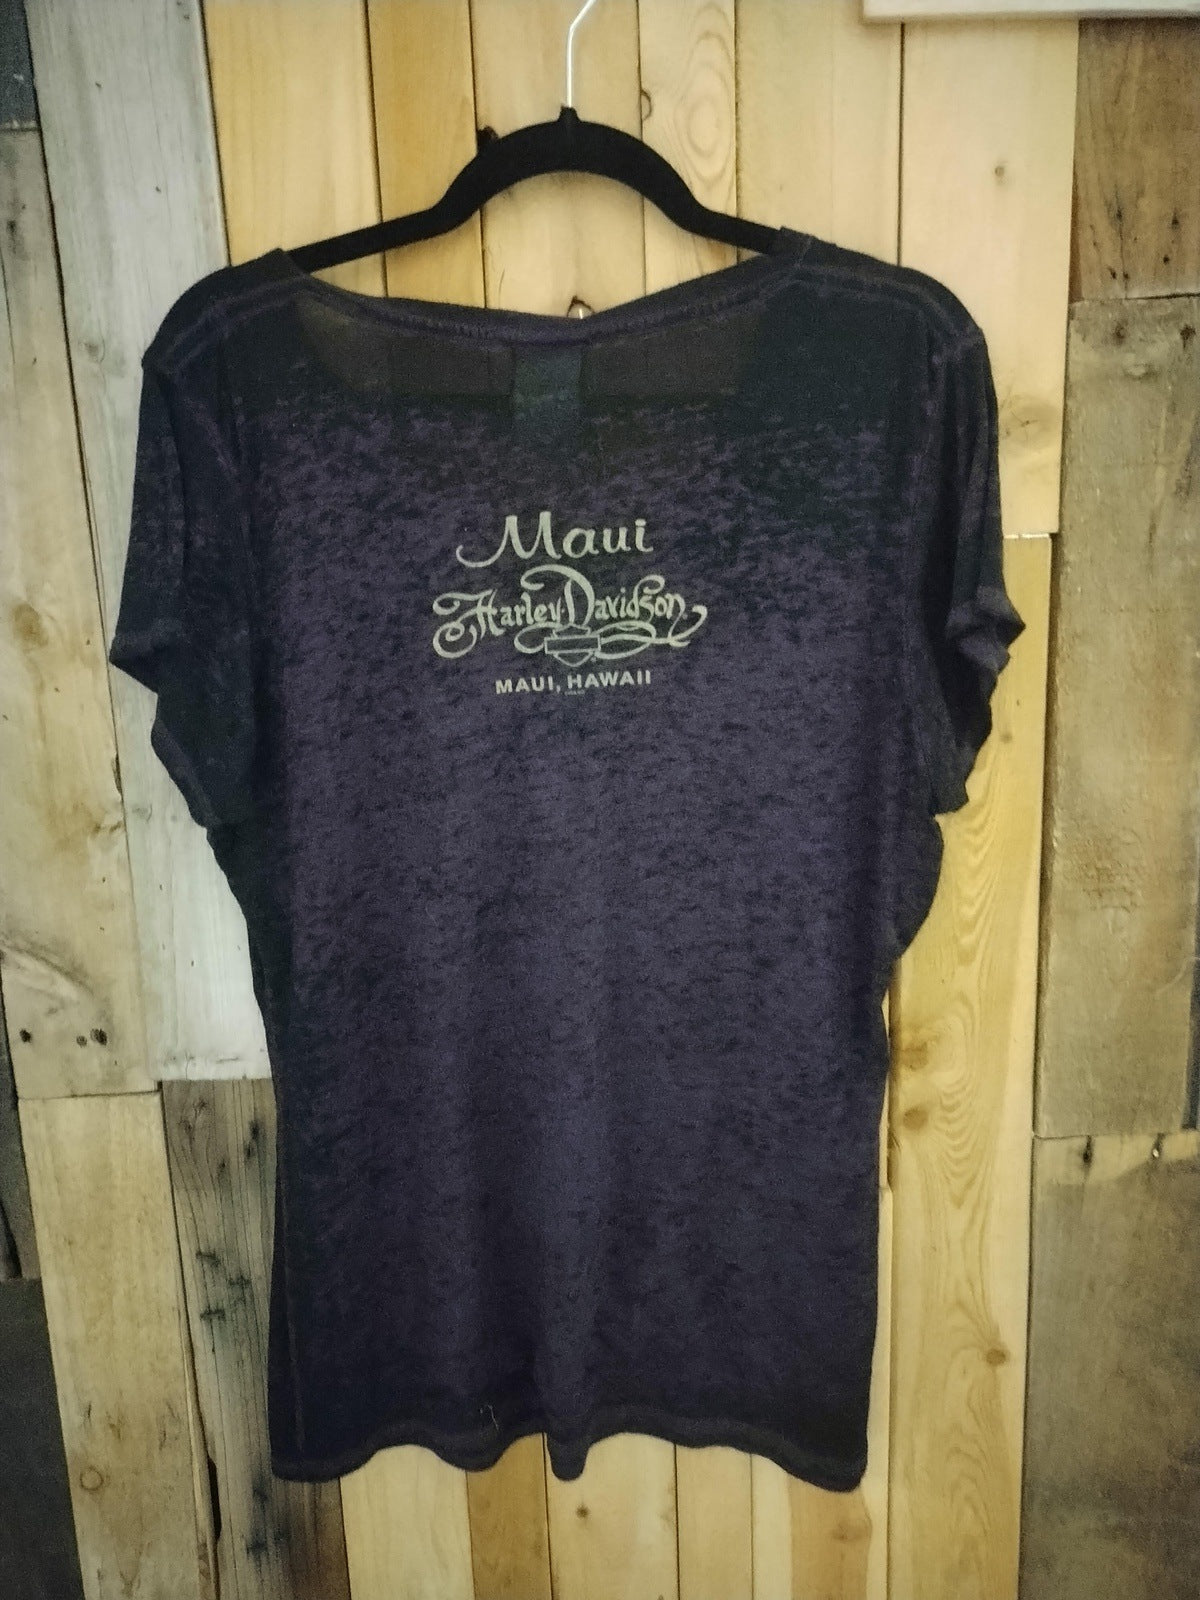 Harley Davidson "Maui" Official Merchandise Women's T Shirt Semi Sheer Size XL